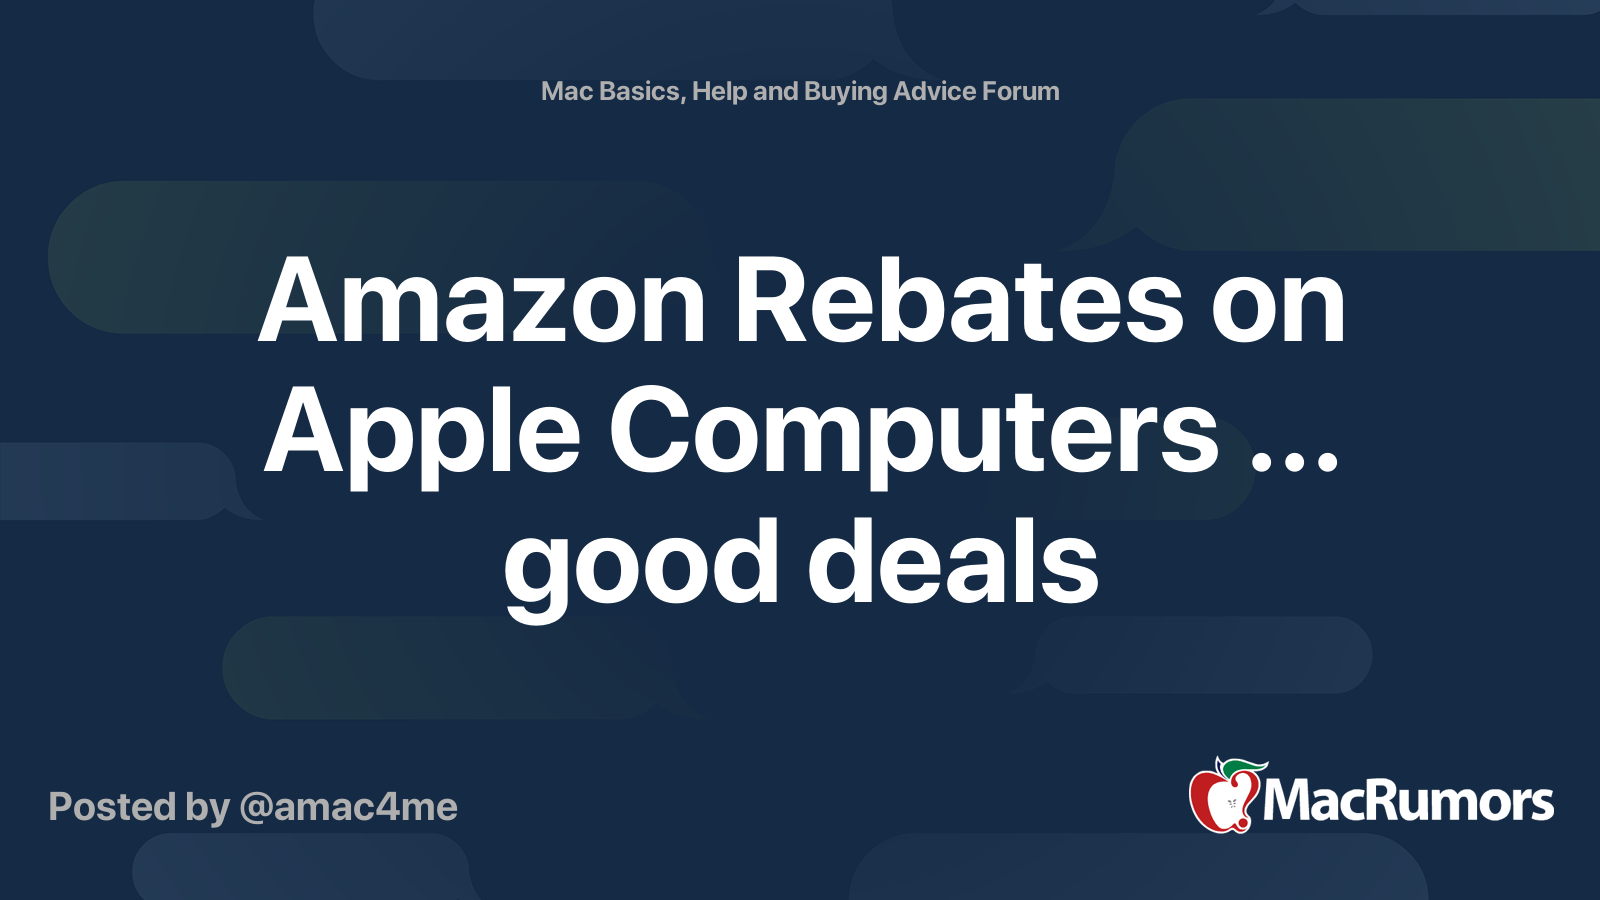 amazon-rebates-on-apple-computers-good-deals-macrumors-forums